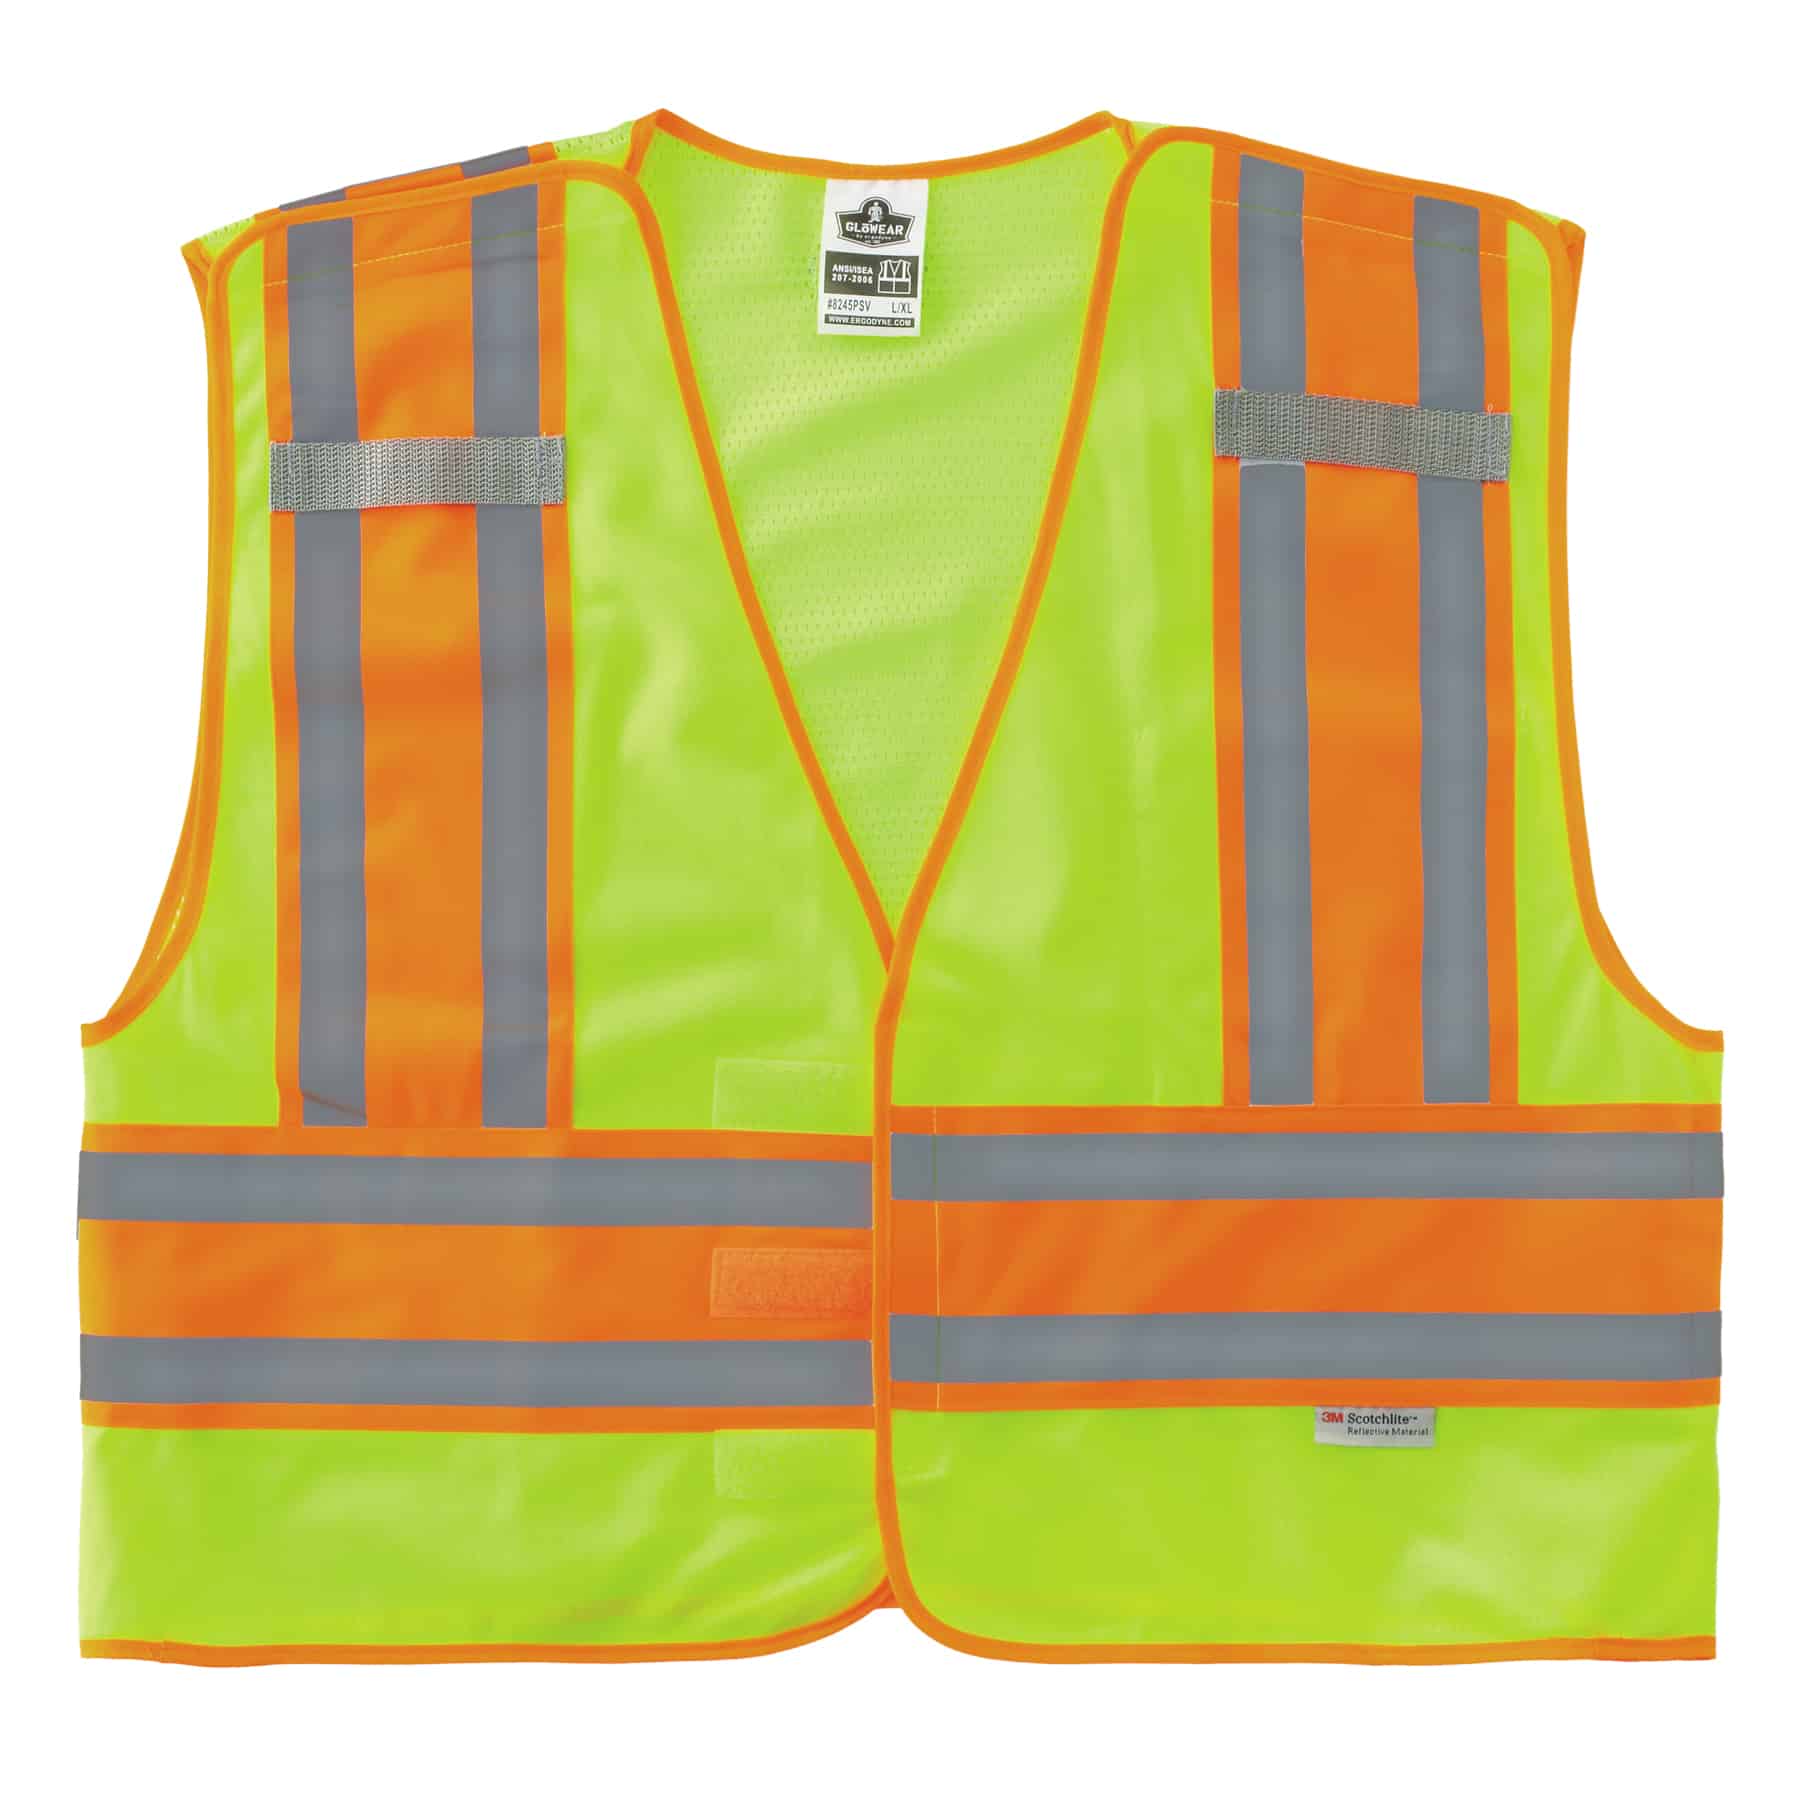 XL ANSI/ ISEA 107-2015 Surveyor Solid Lime Two Tones Safety Vest 